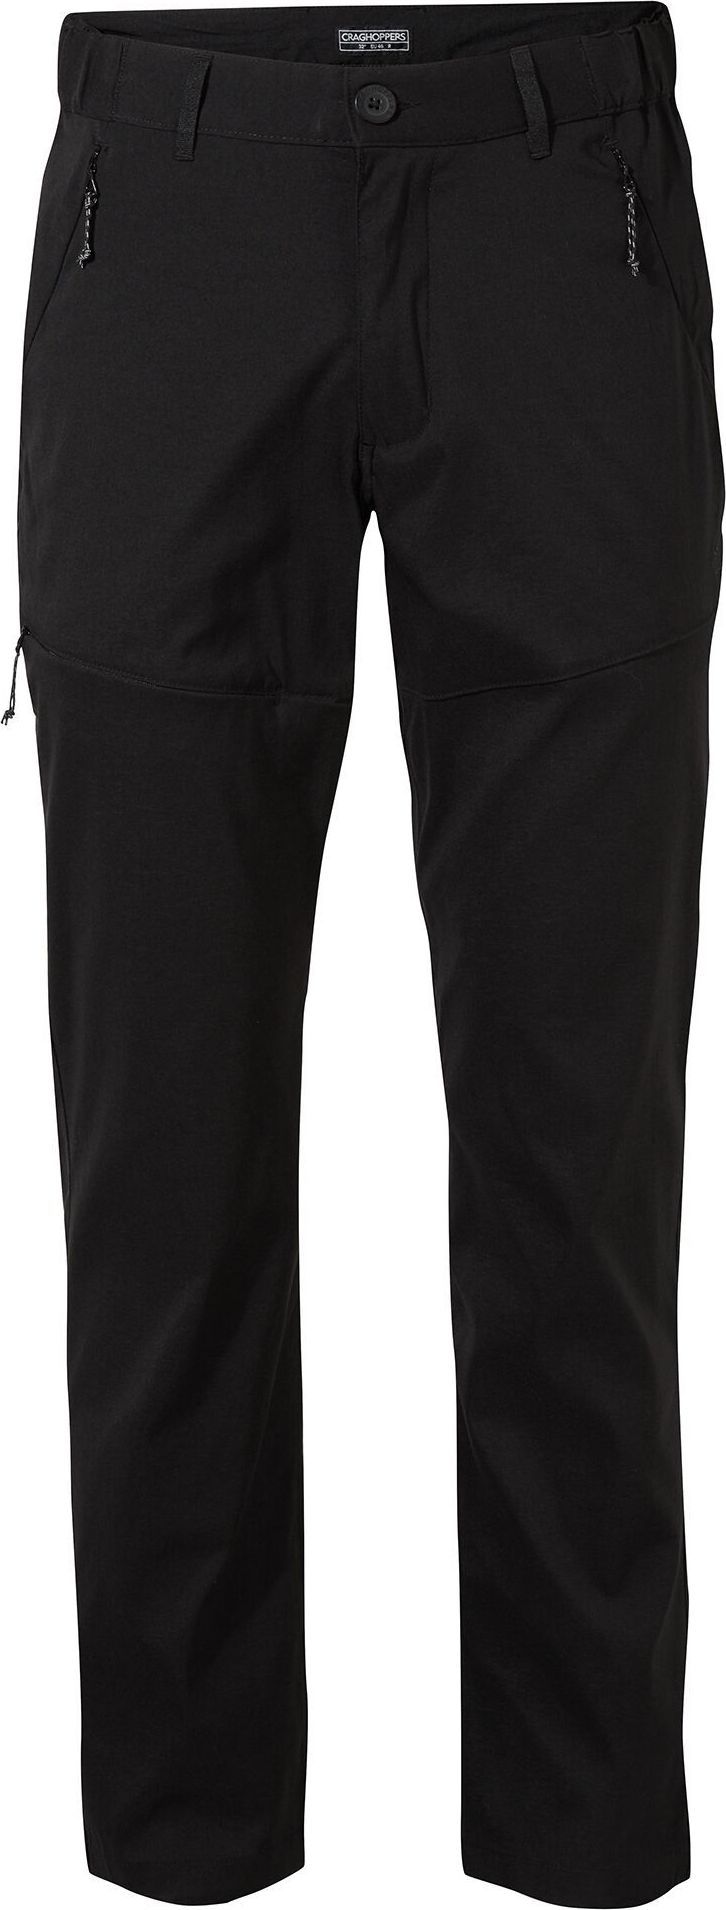 Craghoppers Men's Kiwi Pro II Trousers Black